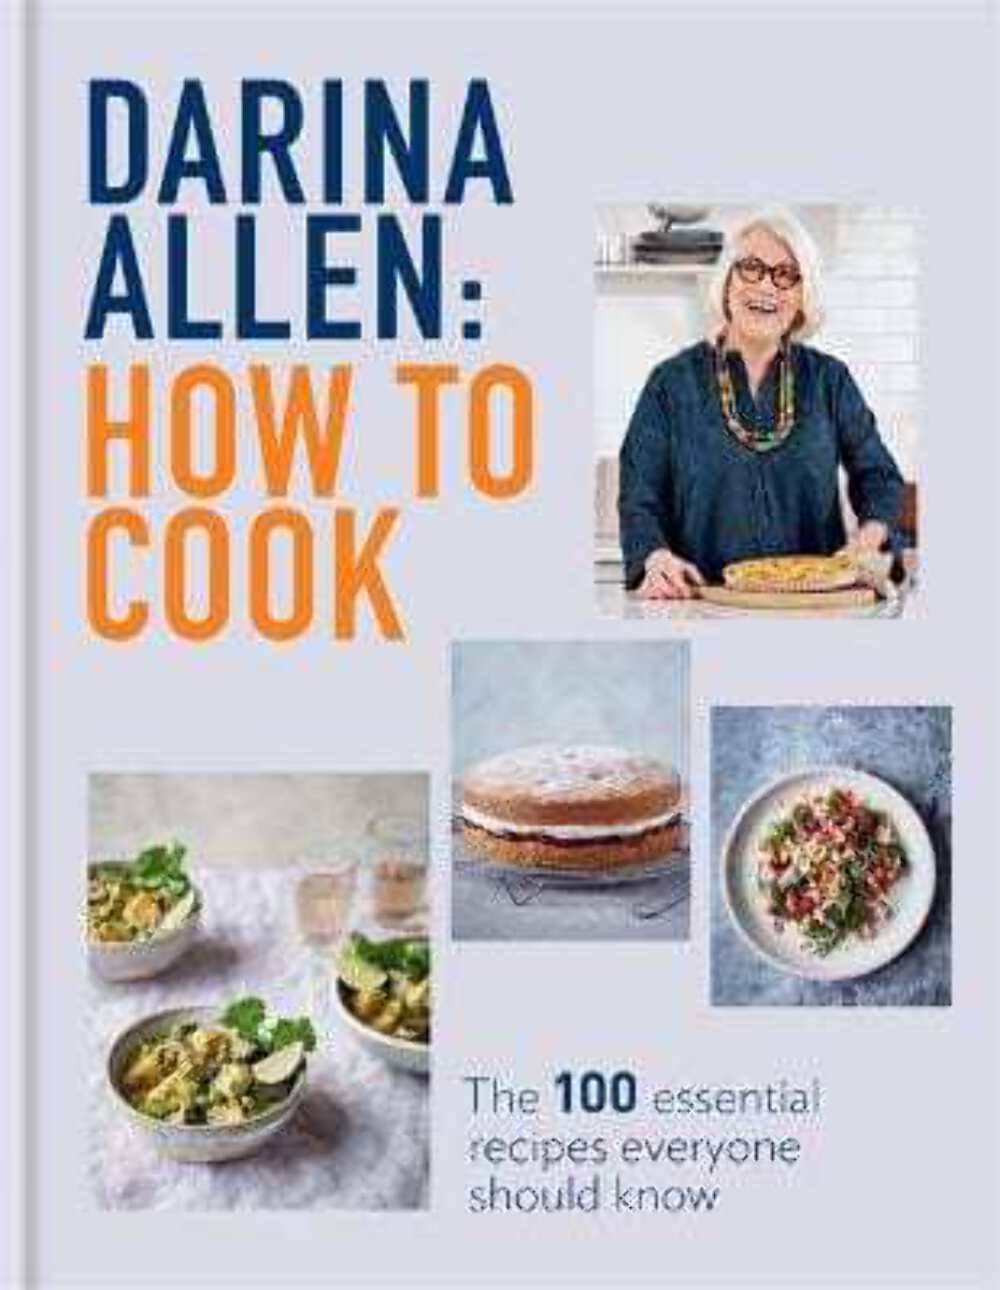 How to Cook by Darina Allen